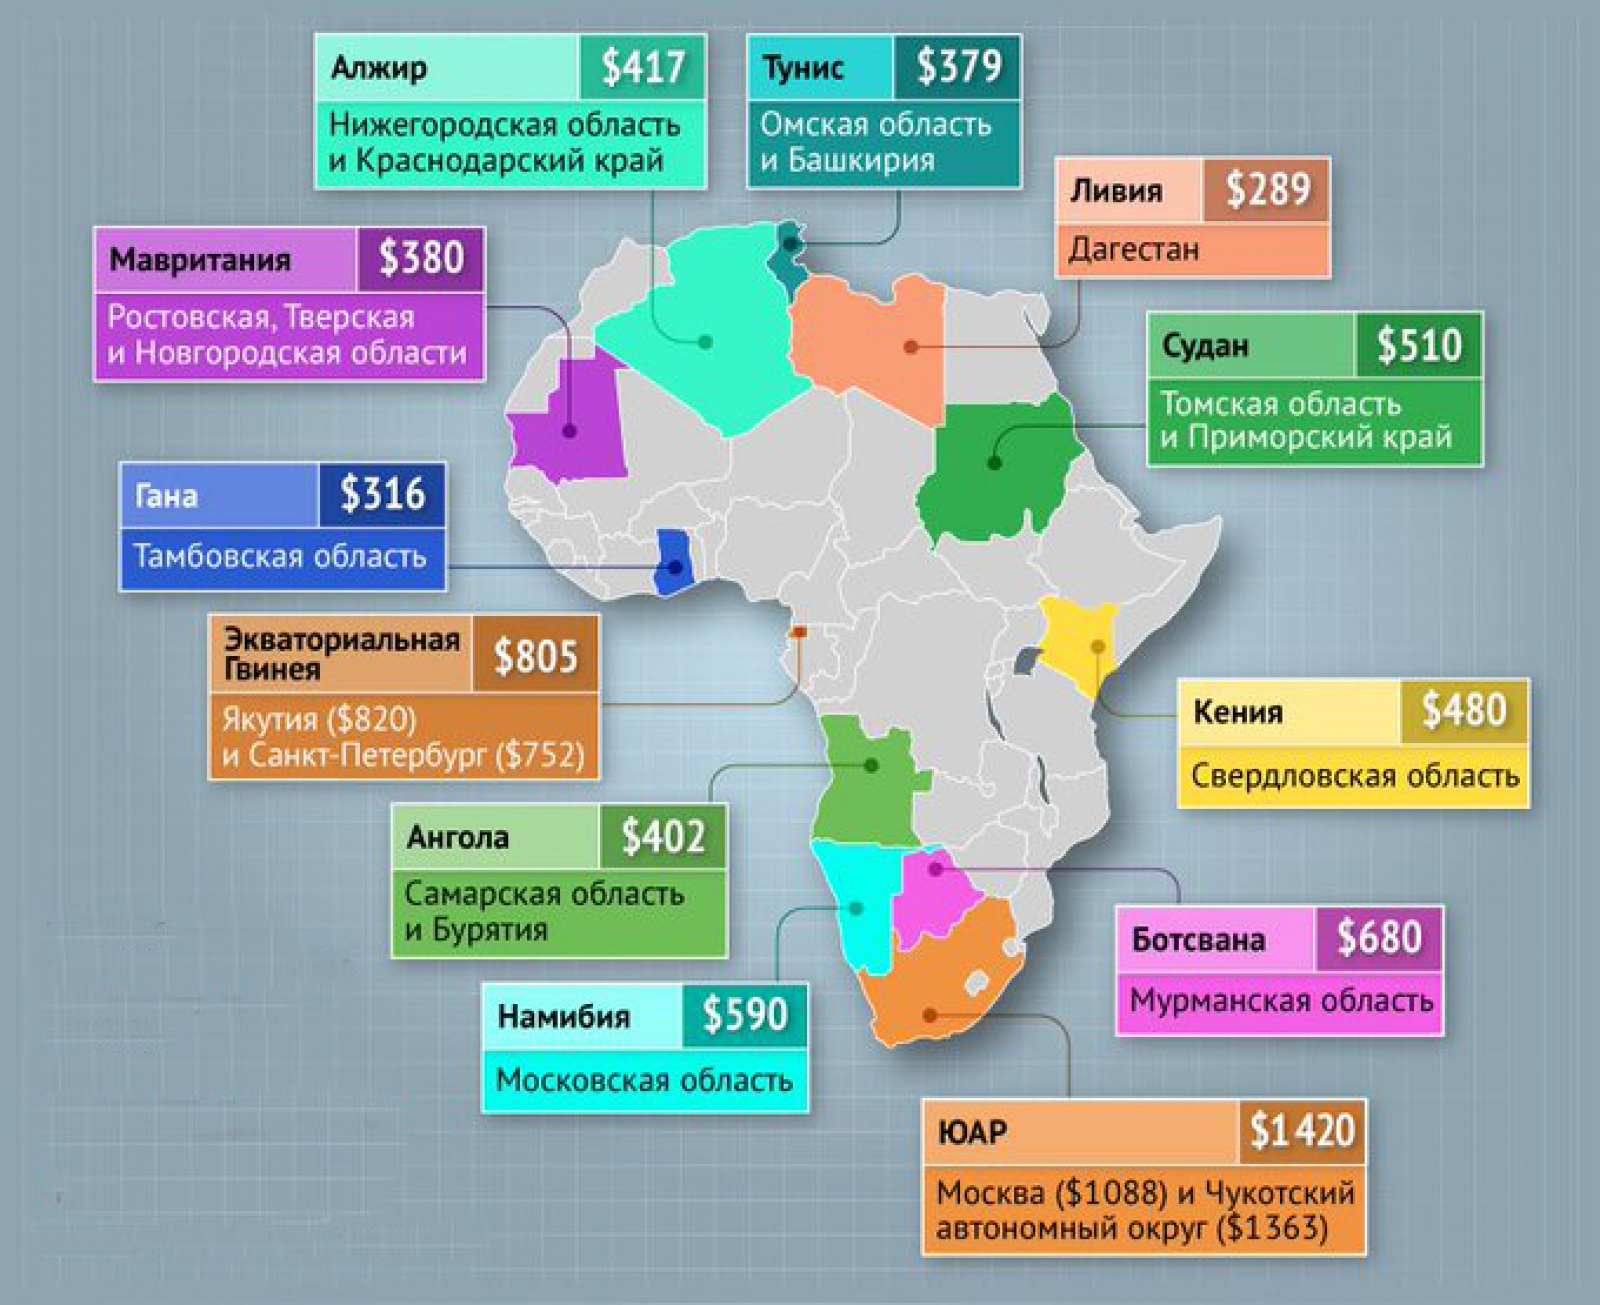 Обстановка в других странах. Средняя зарплата по странам Африки. Средние зарплаты стран Африки. Зарплаты в африканских странах средние. Зарплата в Африке в долларах.